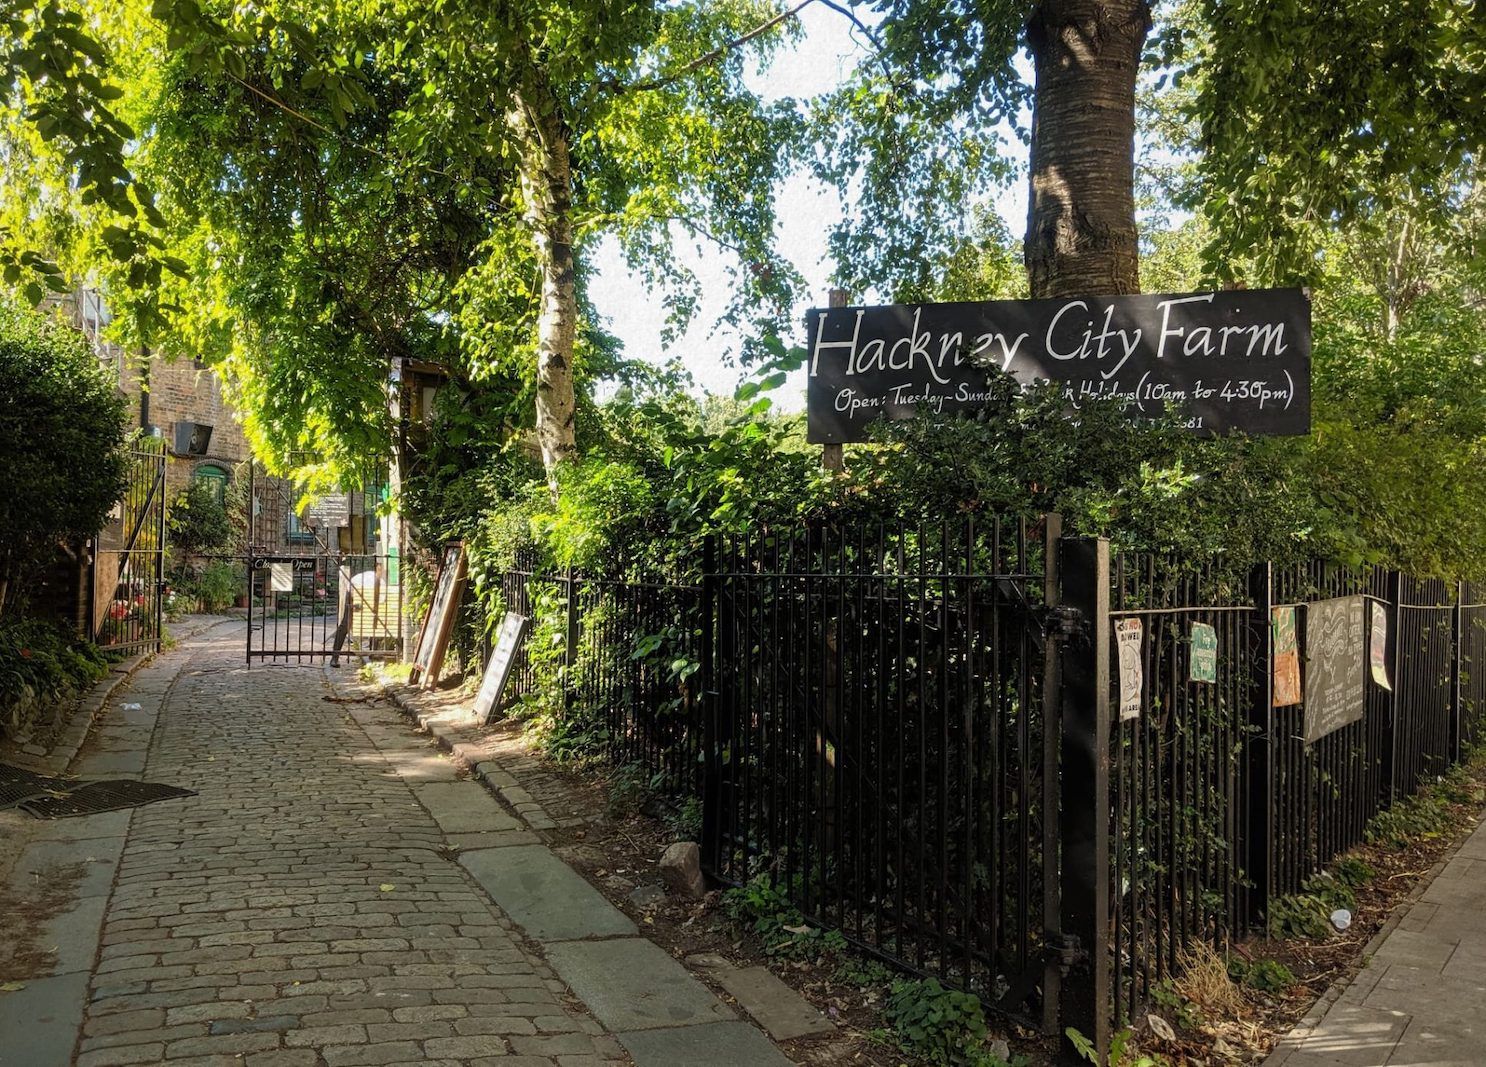 Hackney City Farm – Budget-friendly activities